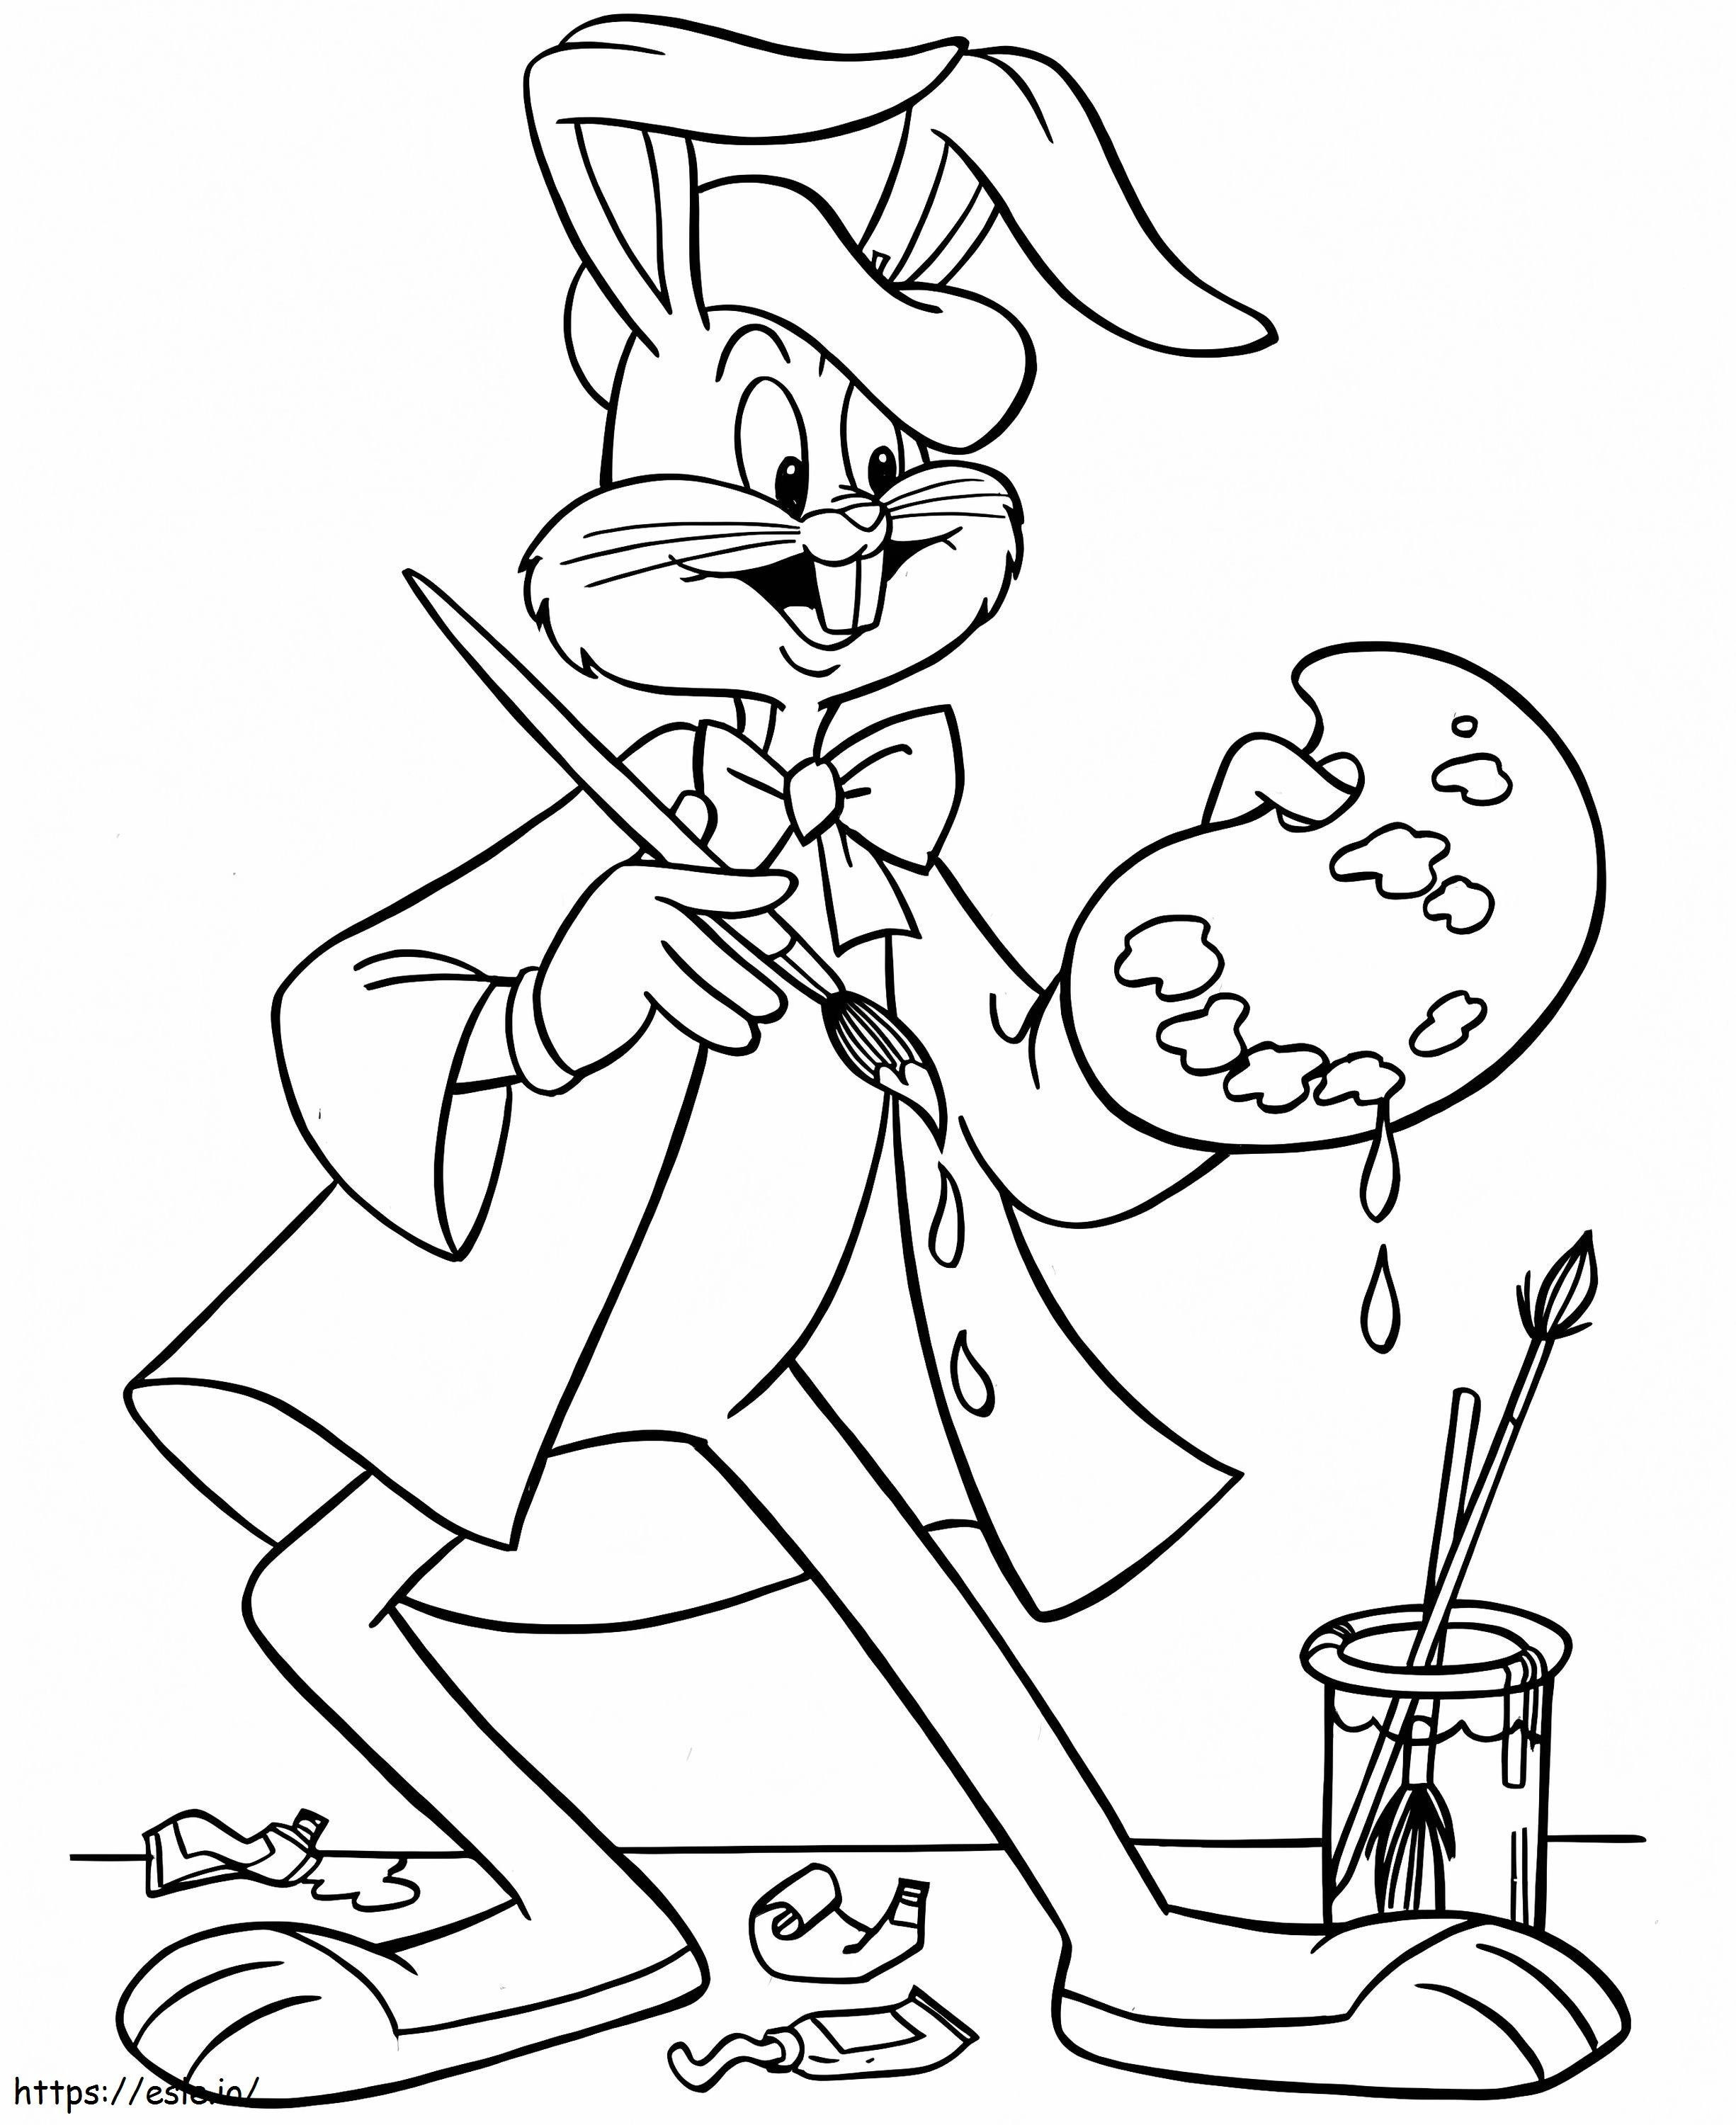 Planse de colorat Bugs Bunny de colorat